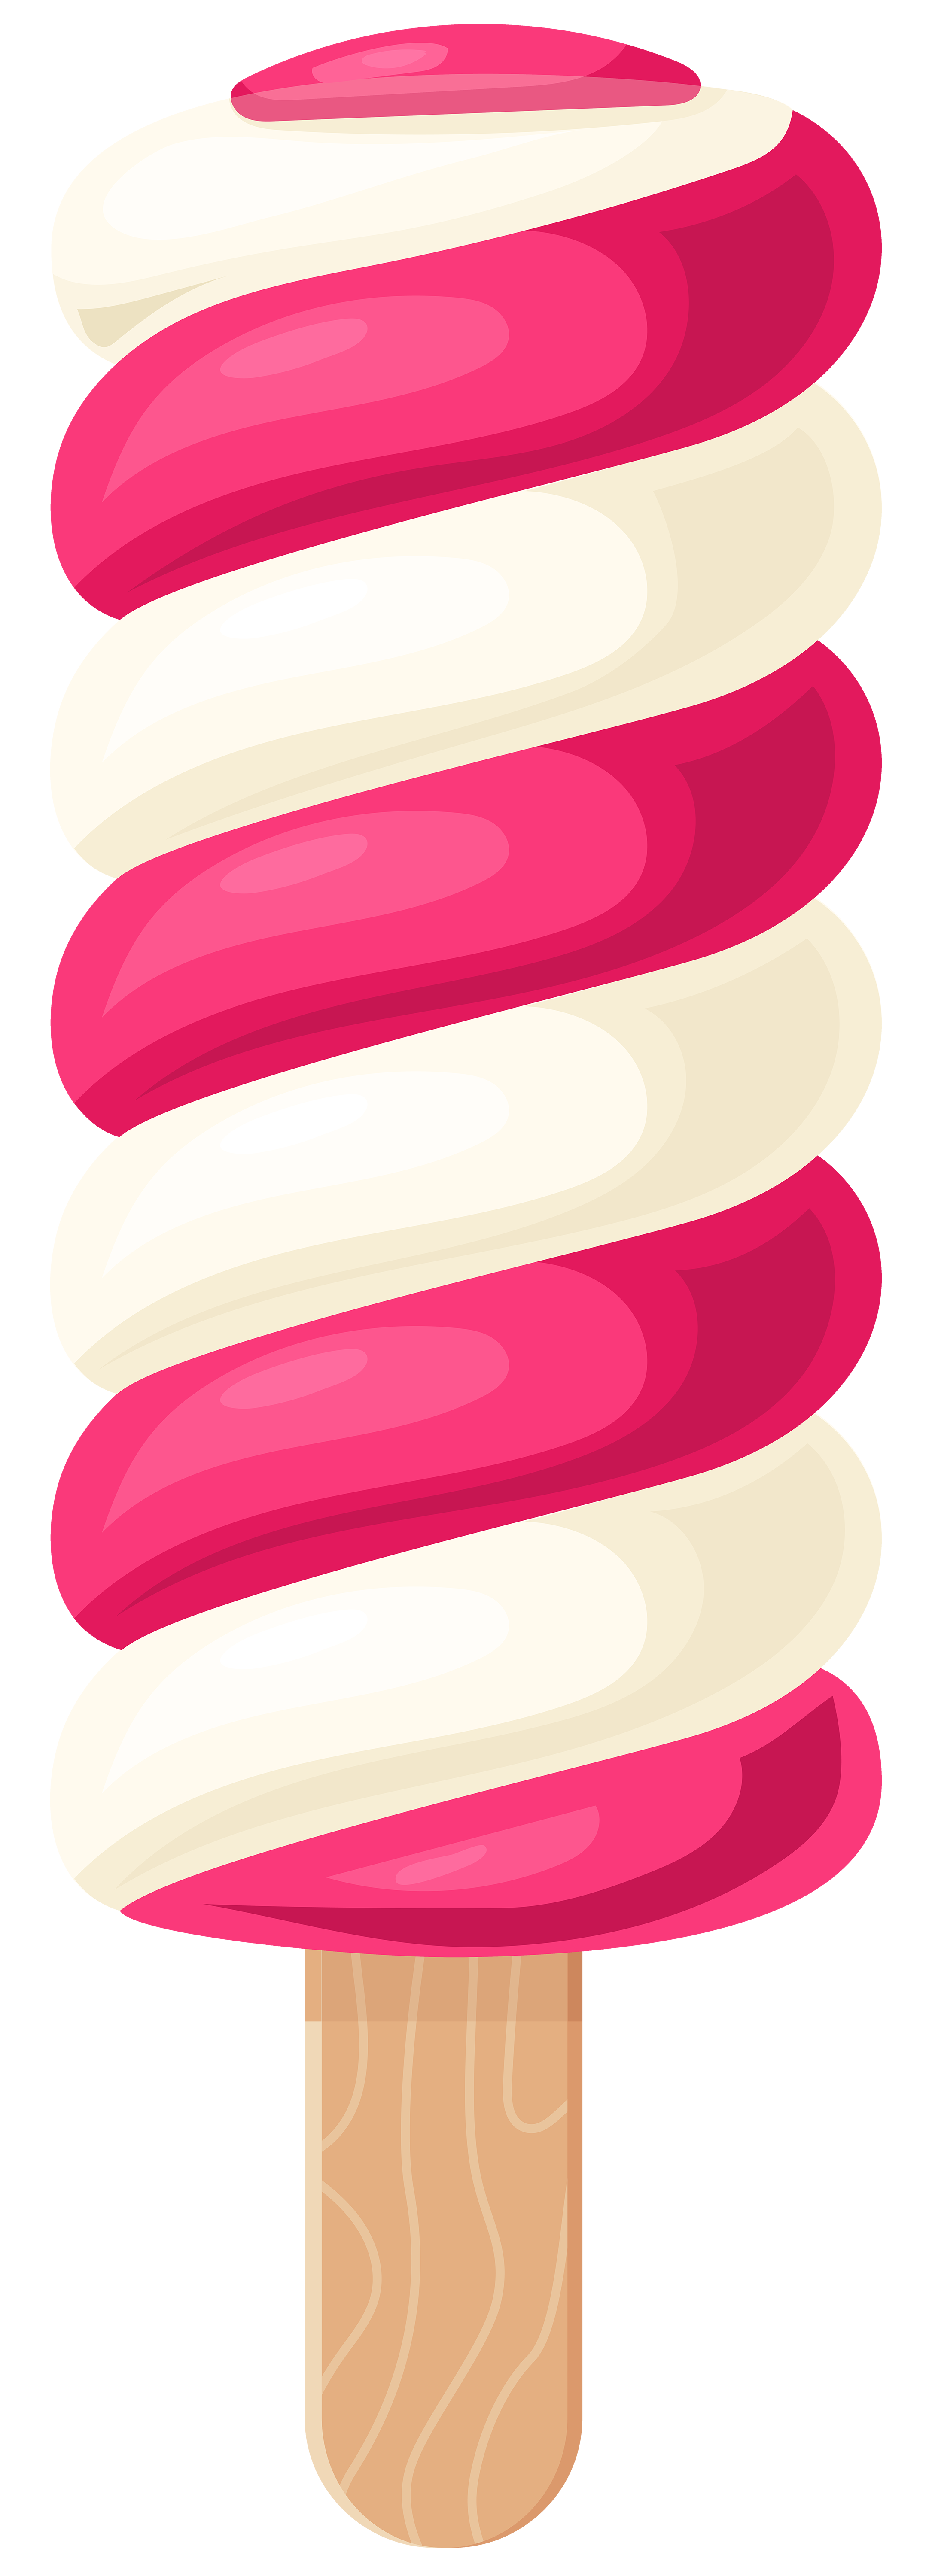 Instruments clipart pink. White ice cream stick